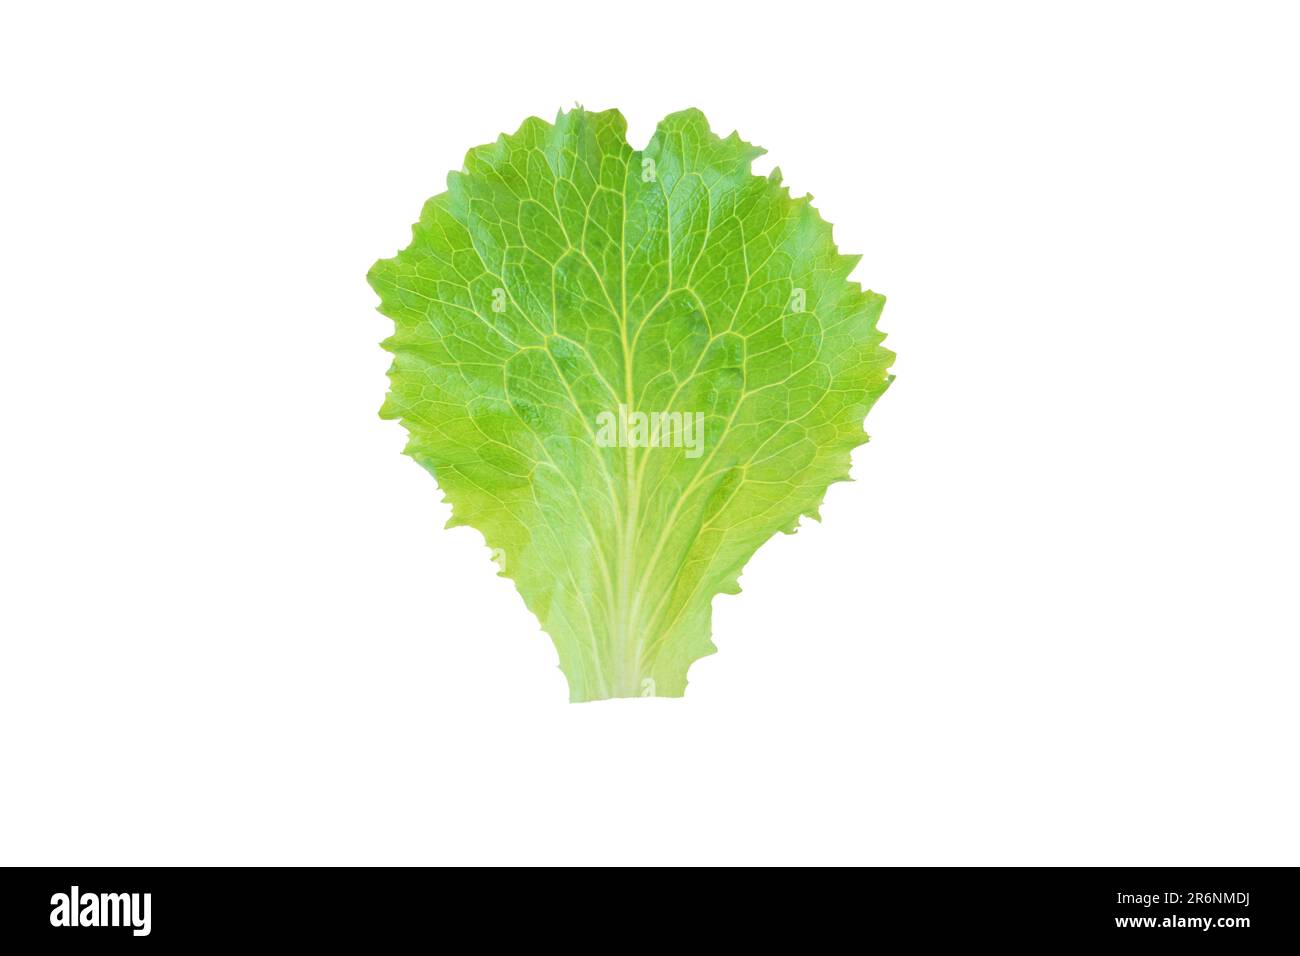 Lettuce salad green leaf isolated on white. Lactuca sativa leaf vegetable. Stock Photo